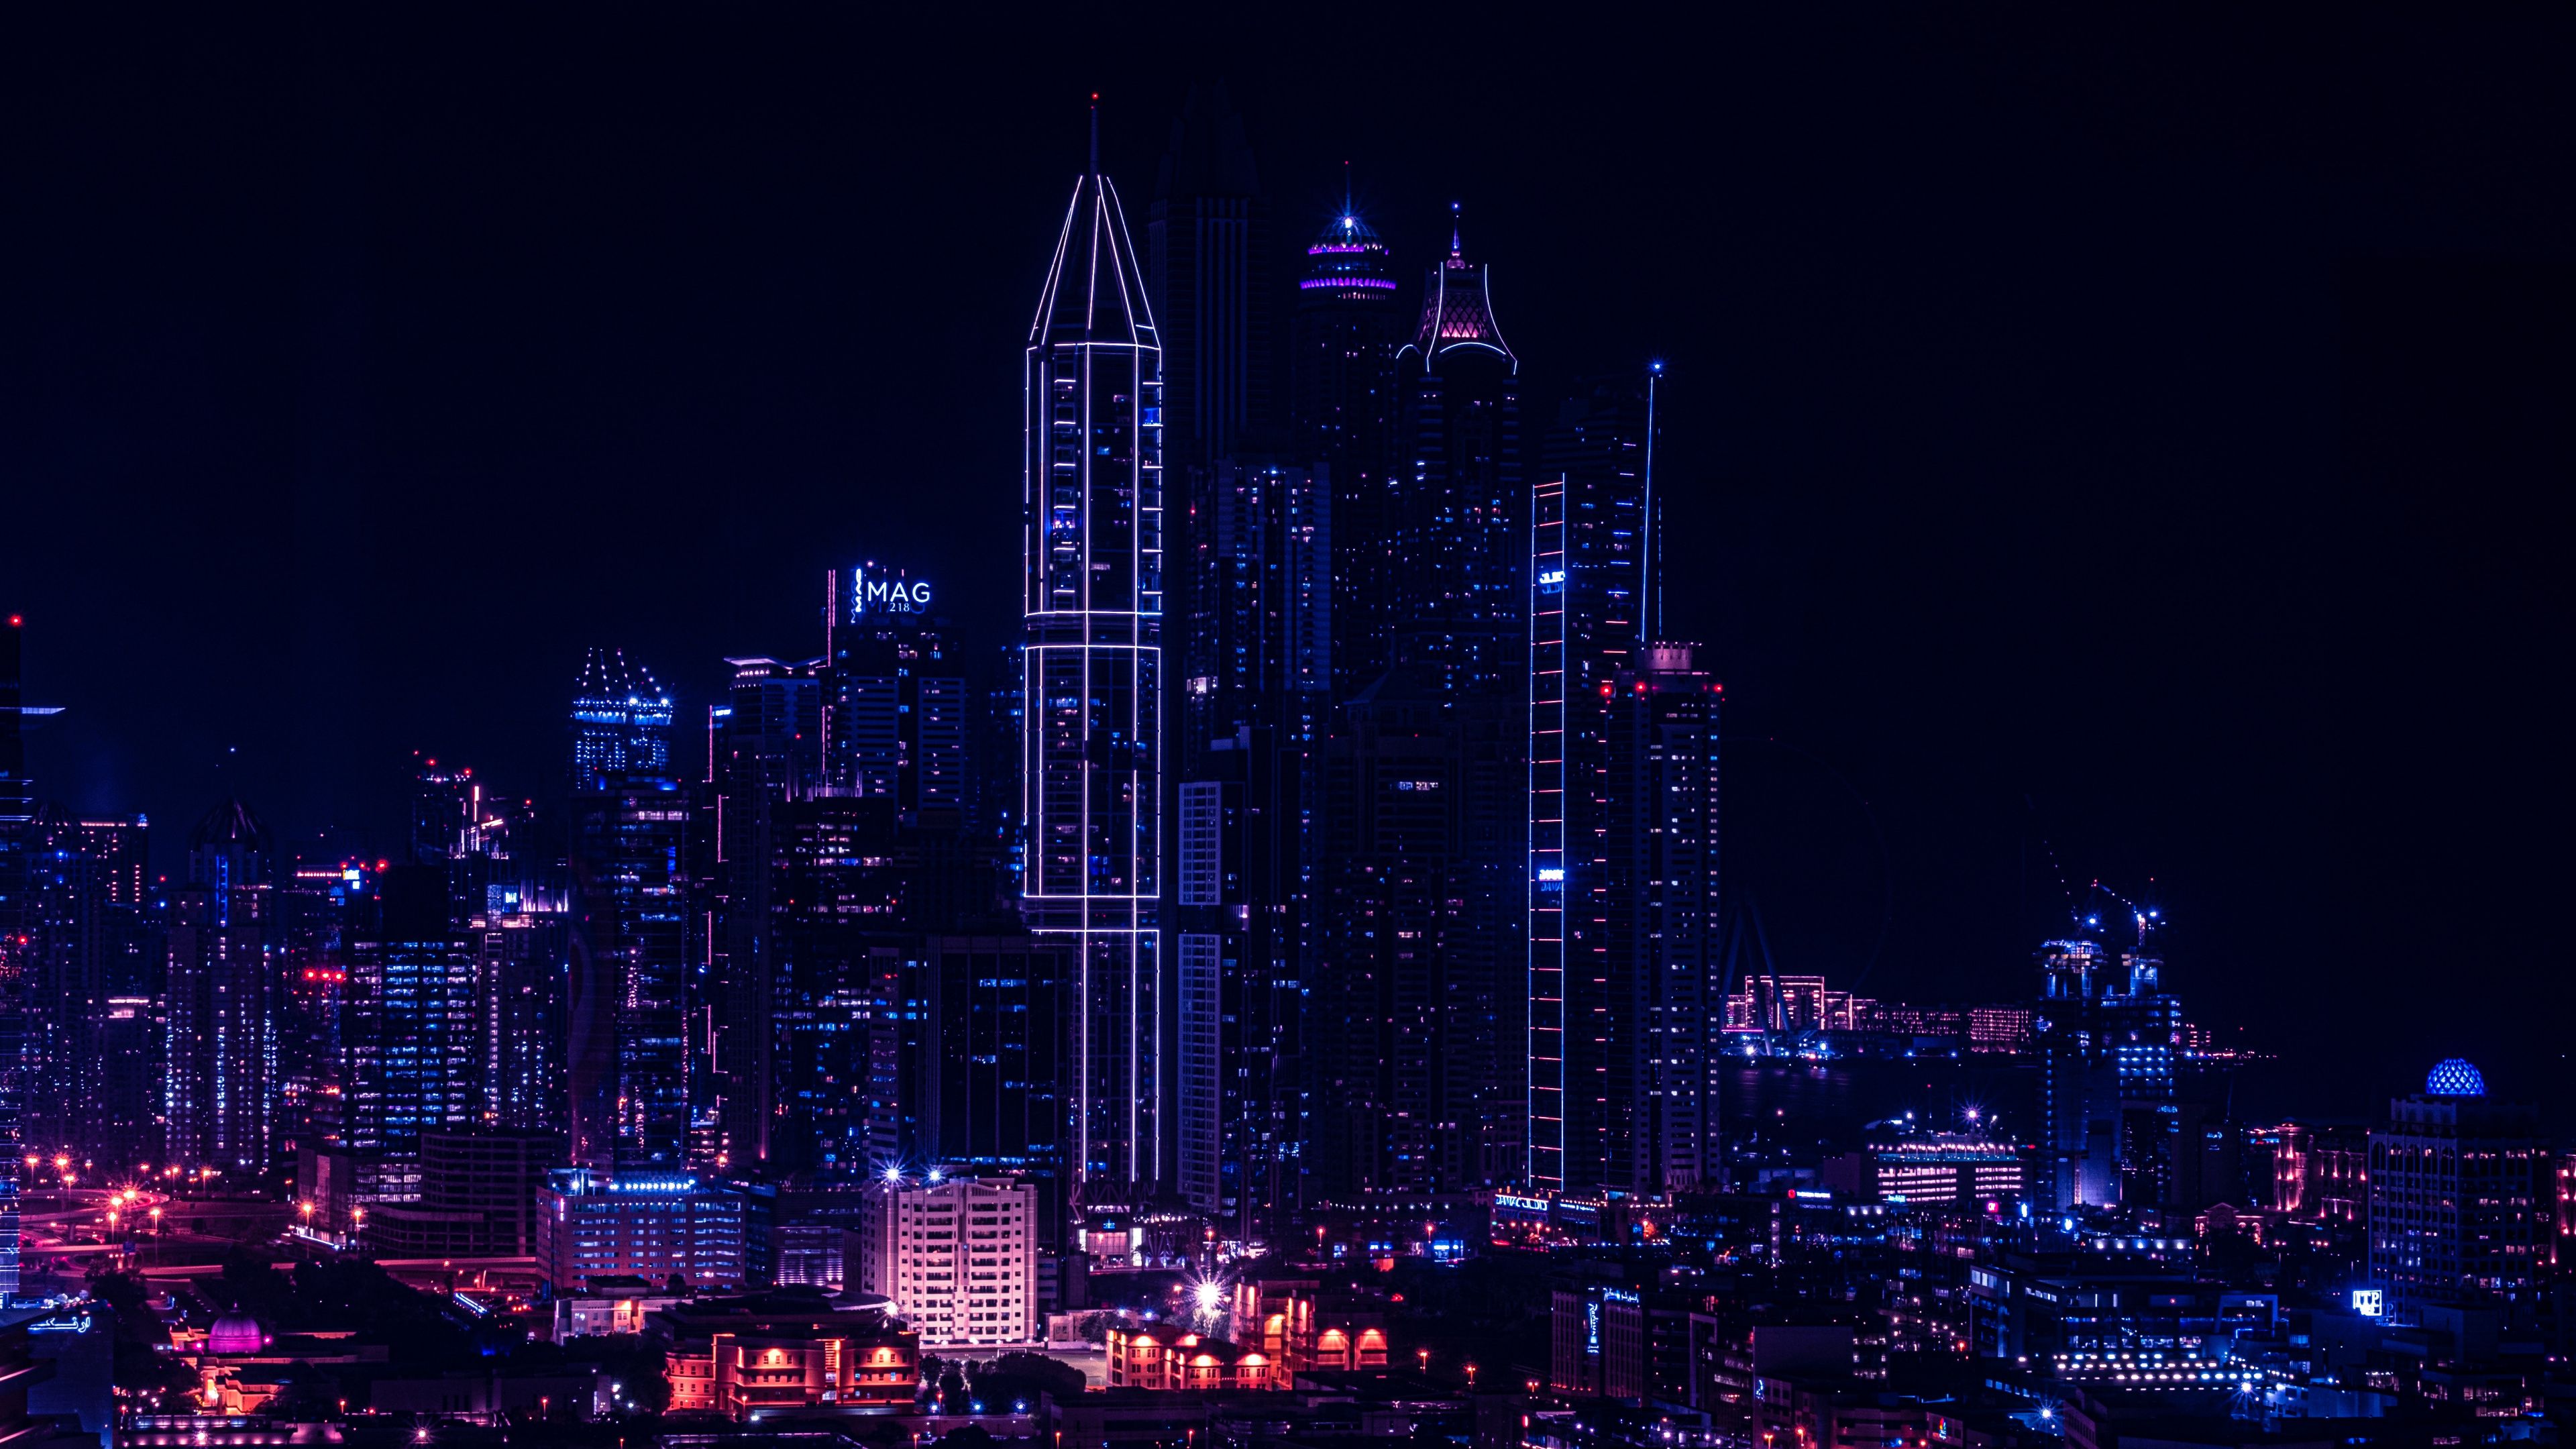 Download City, night, buildings lights, cityscape wallpaper, 3840x 4K UHD 16: Widescreen